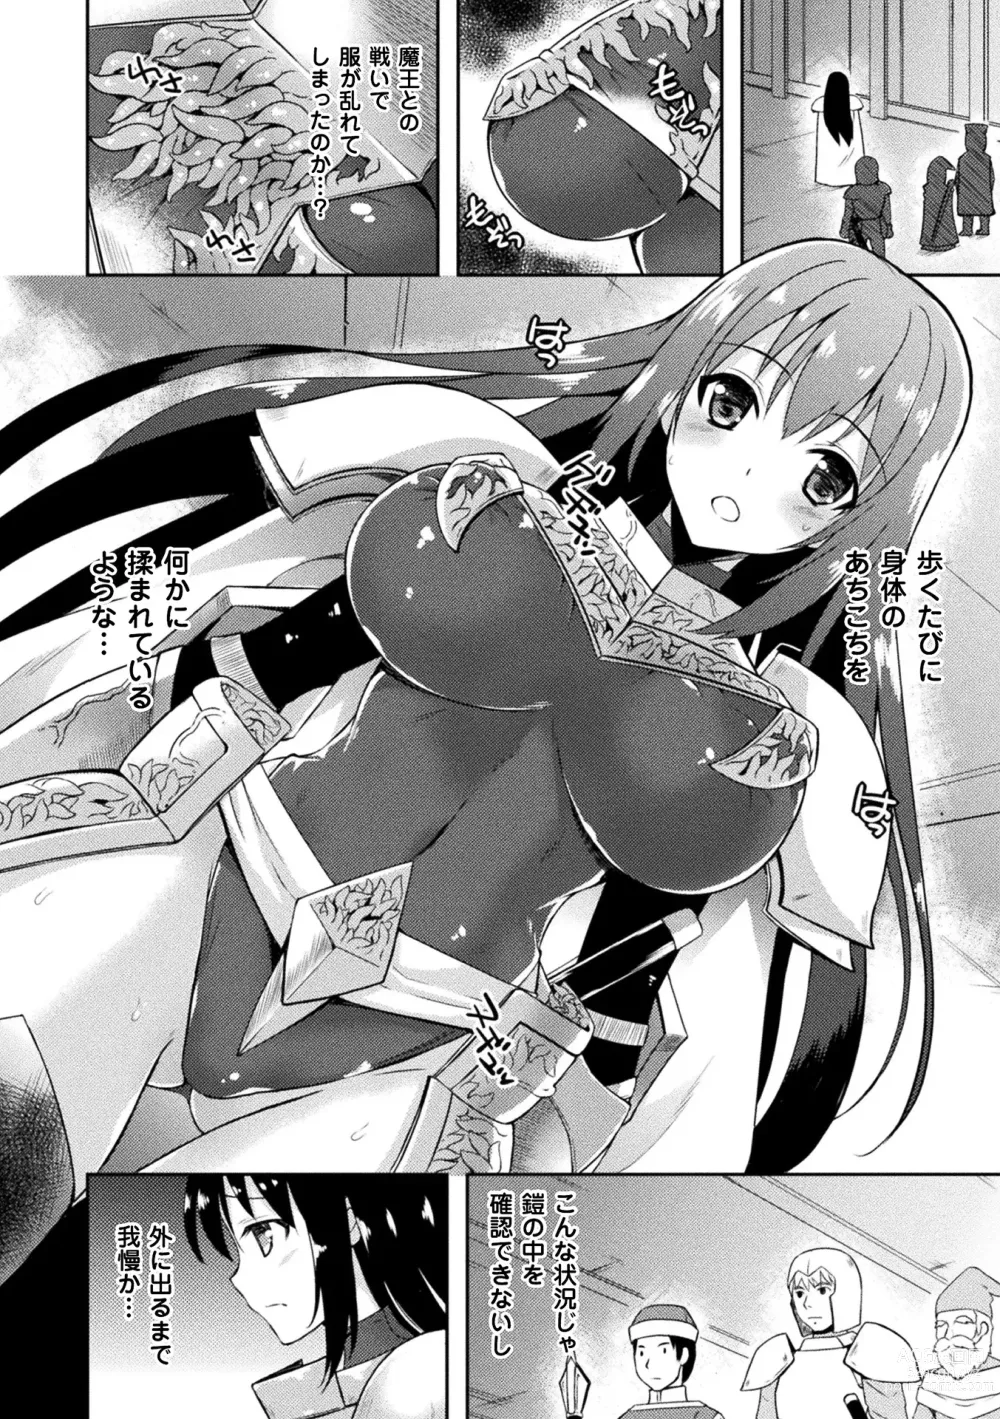 Page 8 of manga Tentacle Holic